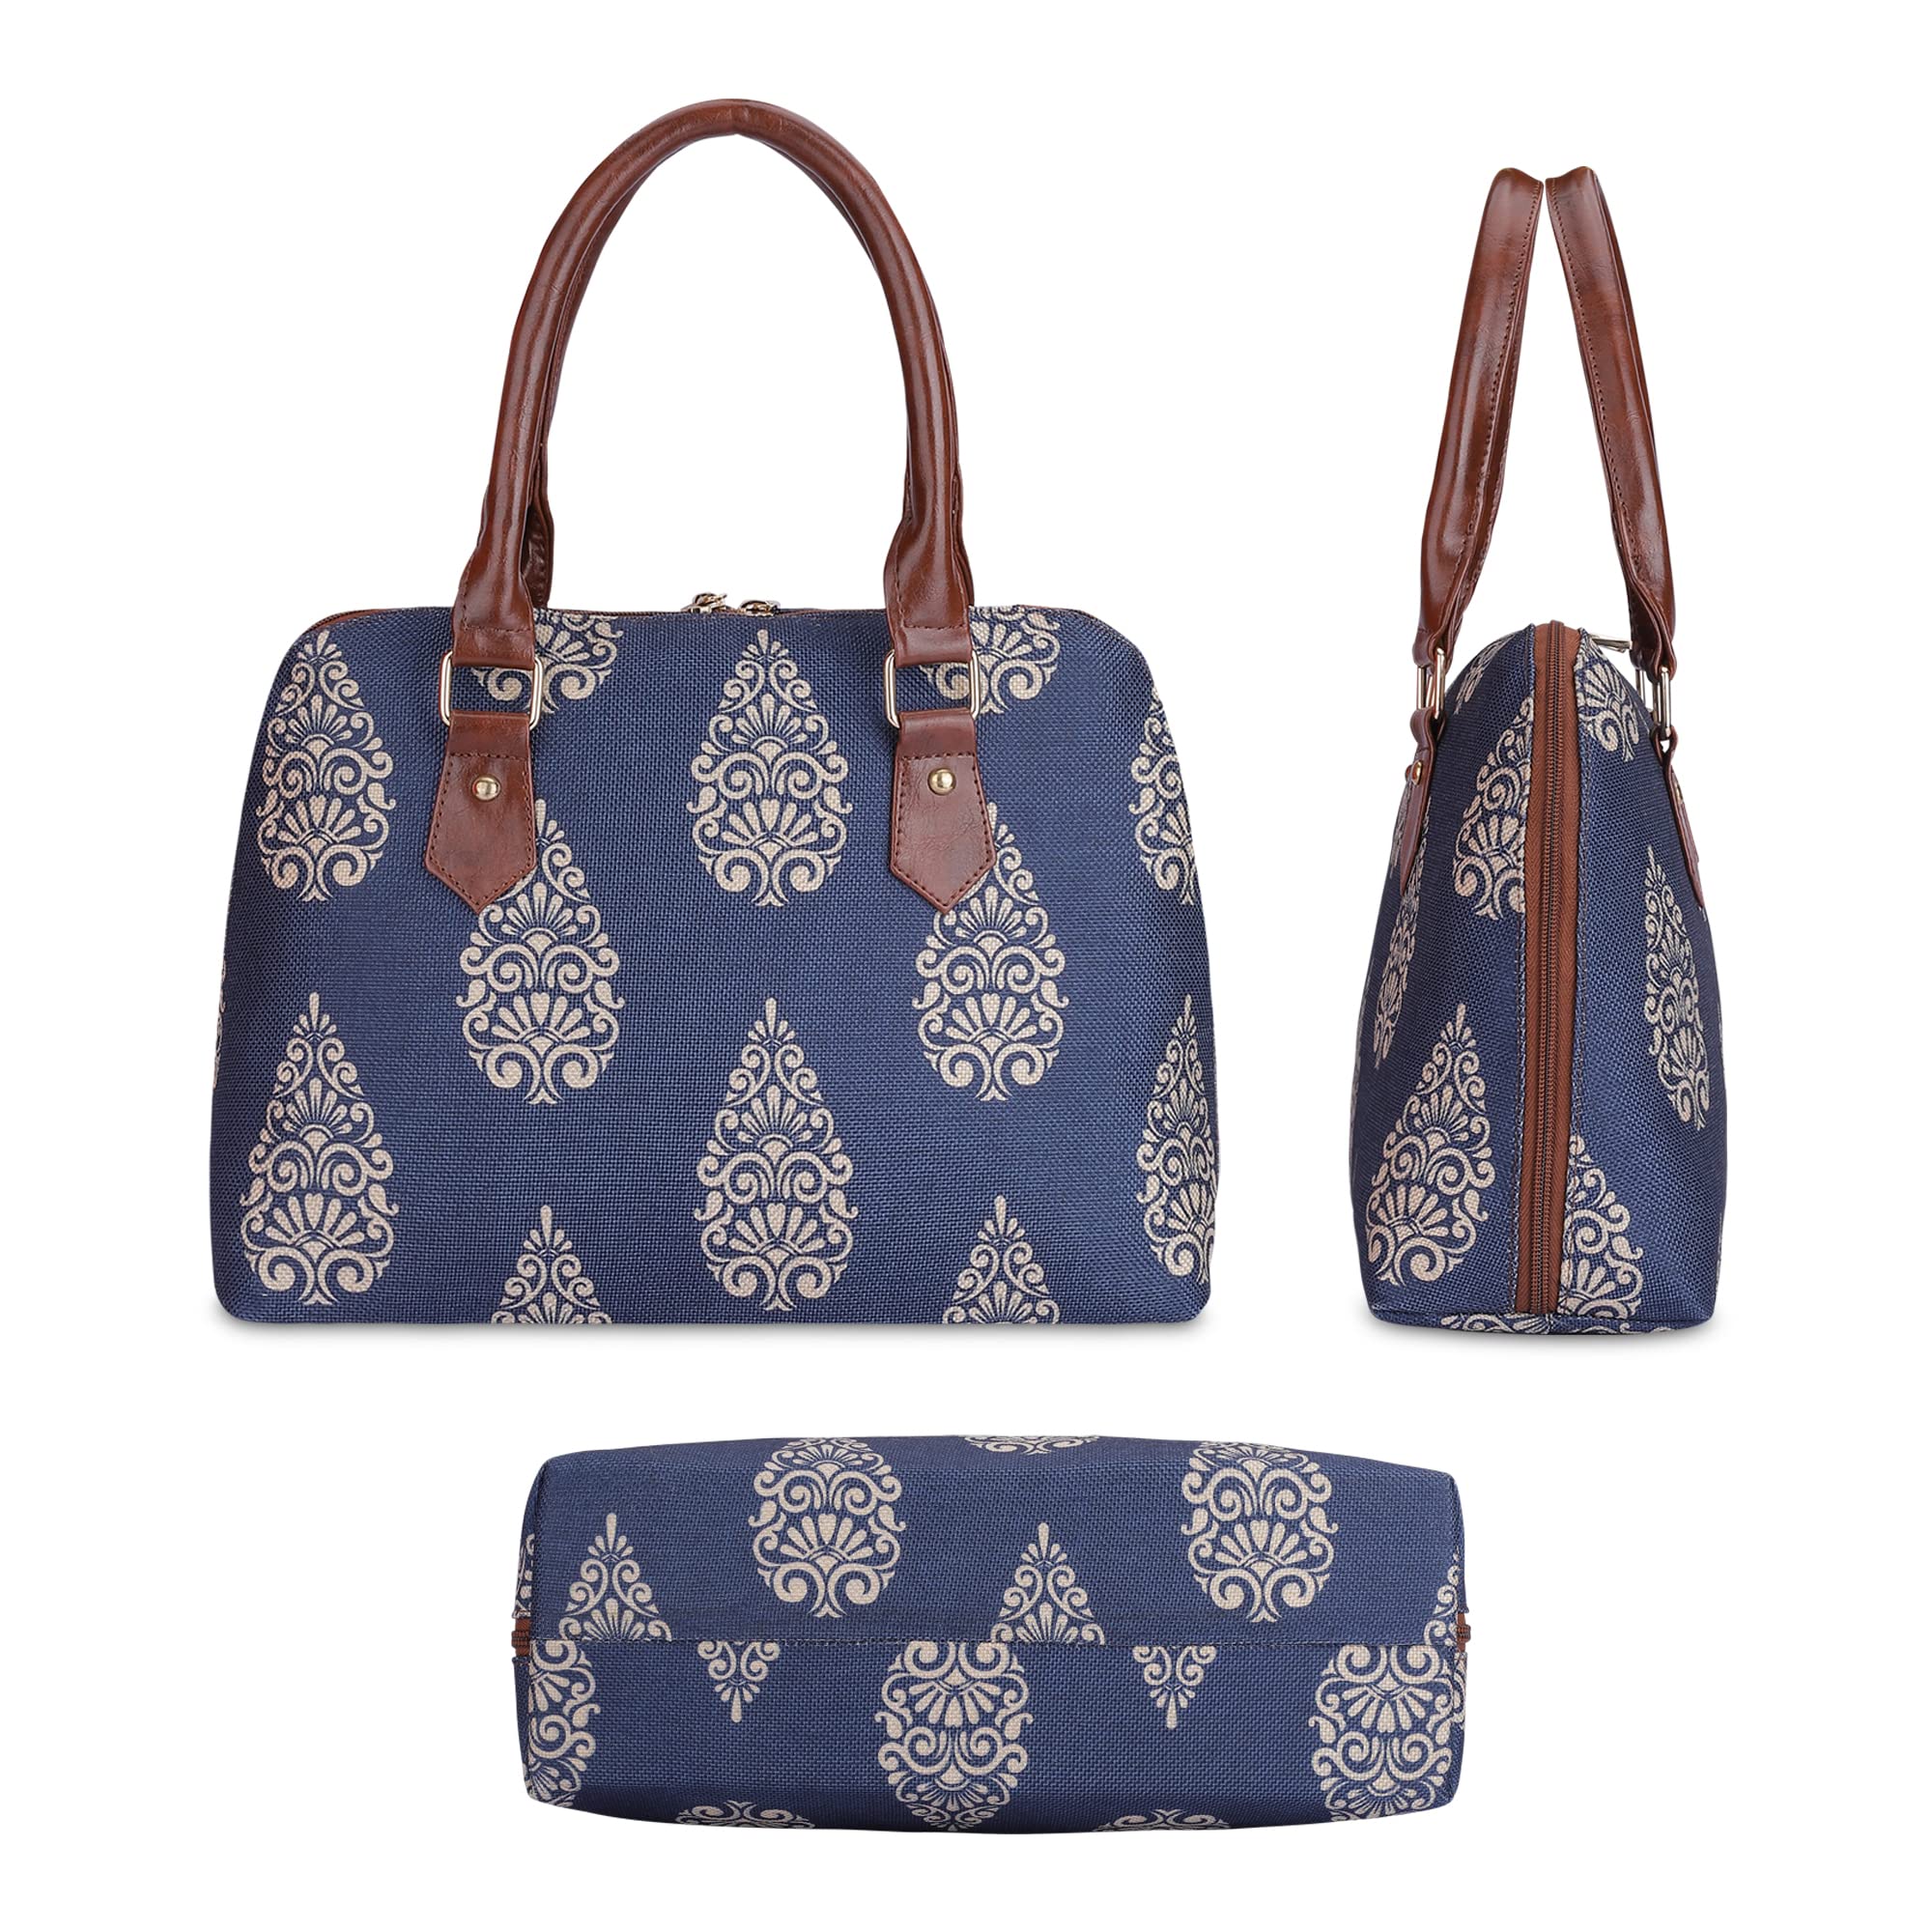 Designer Handbag | Office Use Handbags | Leather Purse | Get up to 60% off